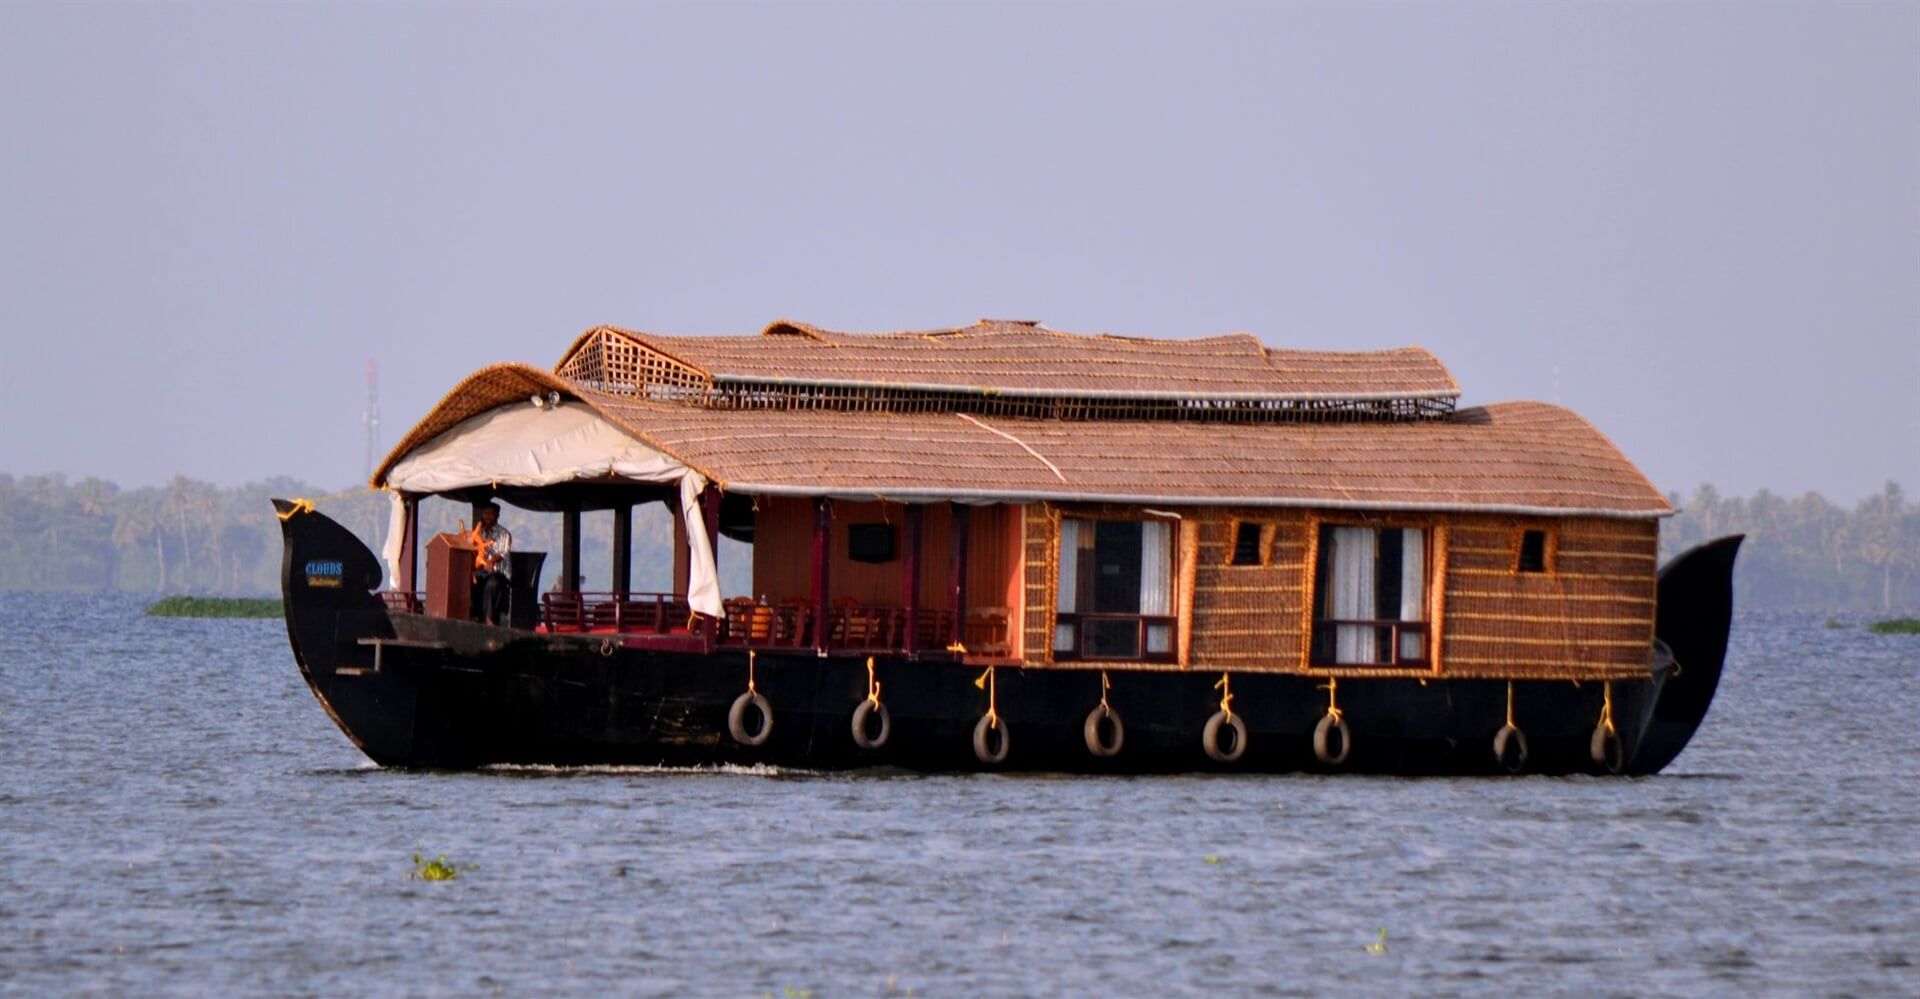 Kettuvallum, a typical house boat in Kerala